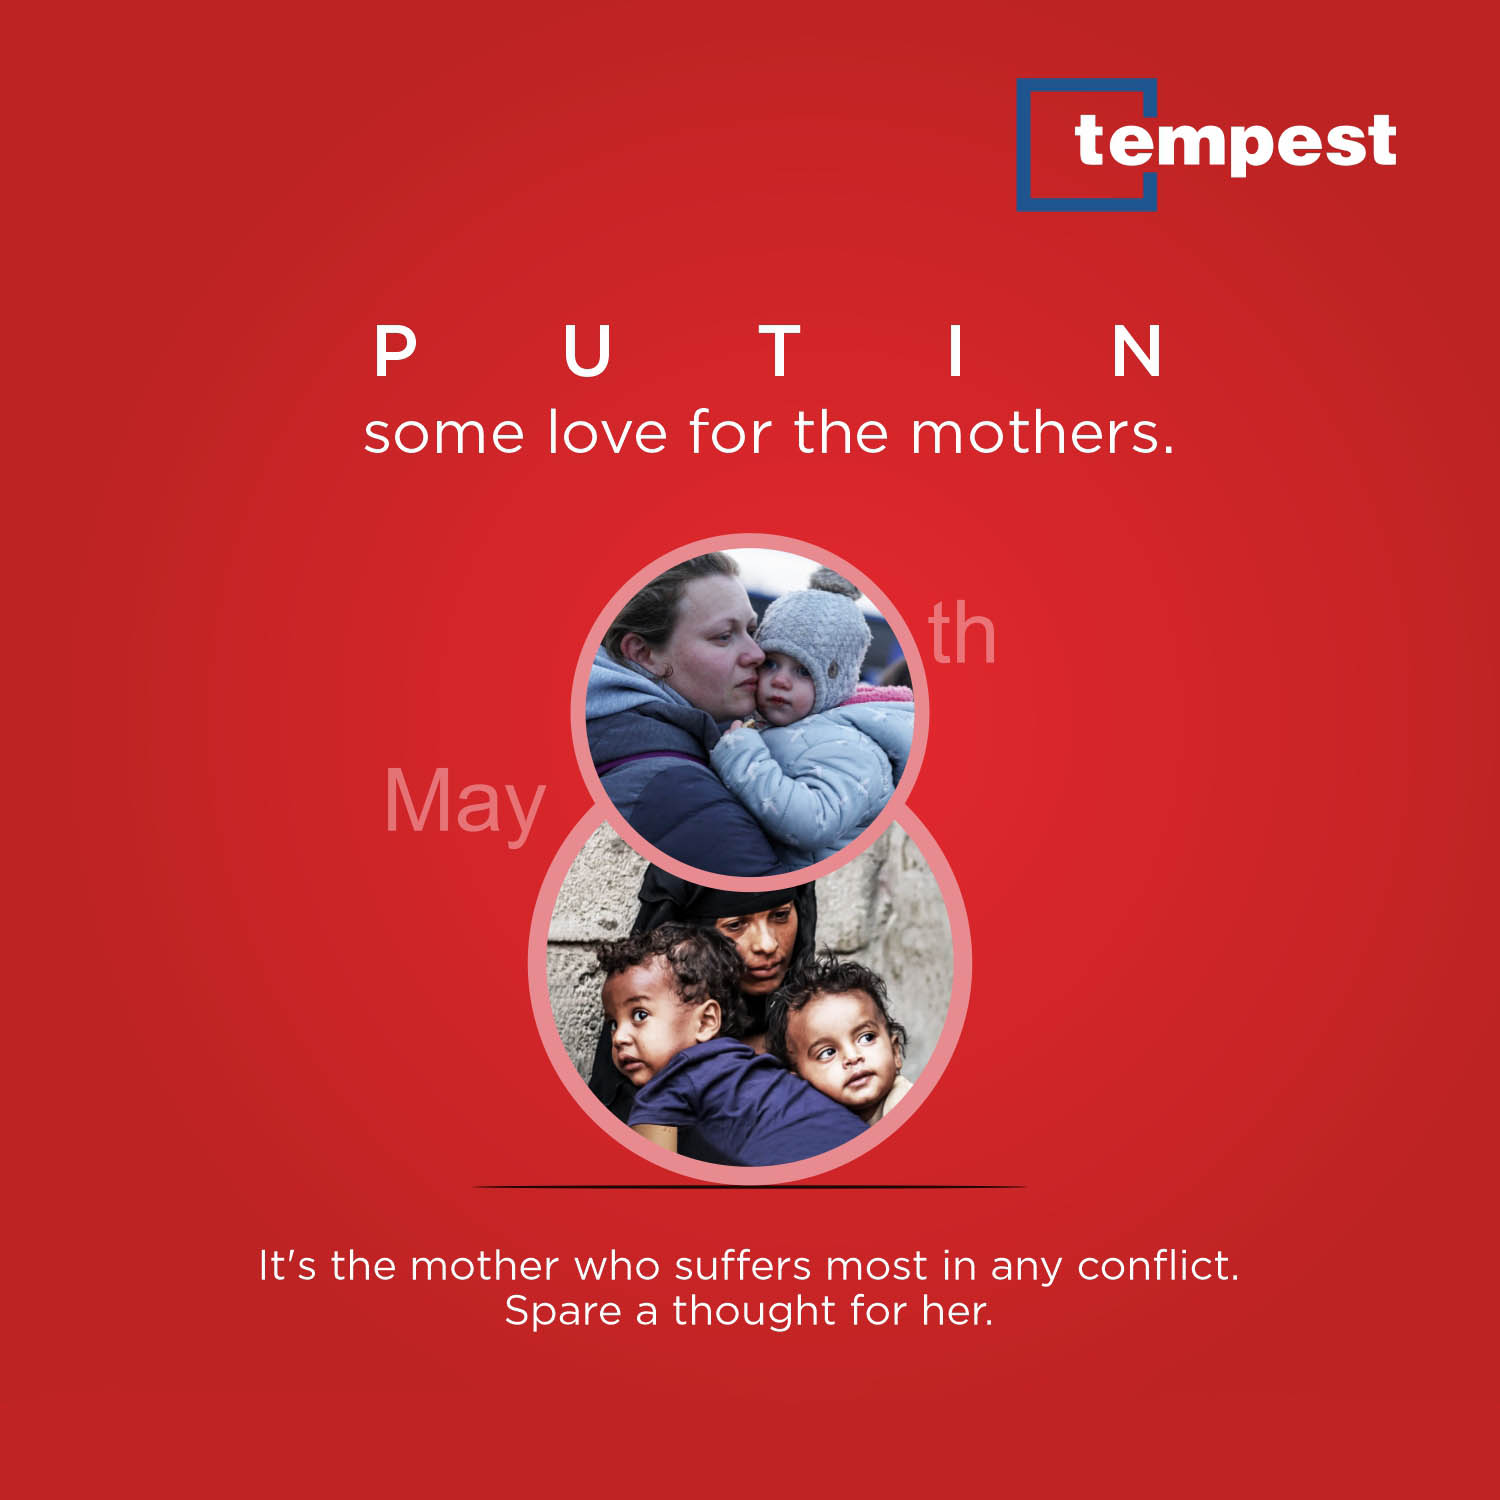 Tempest Social Media Advertising Campaign